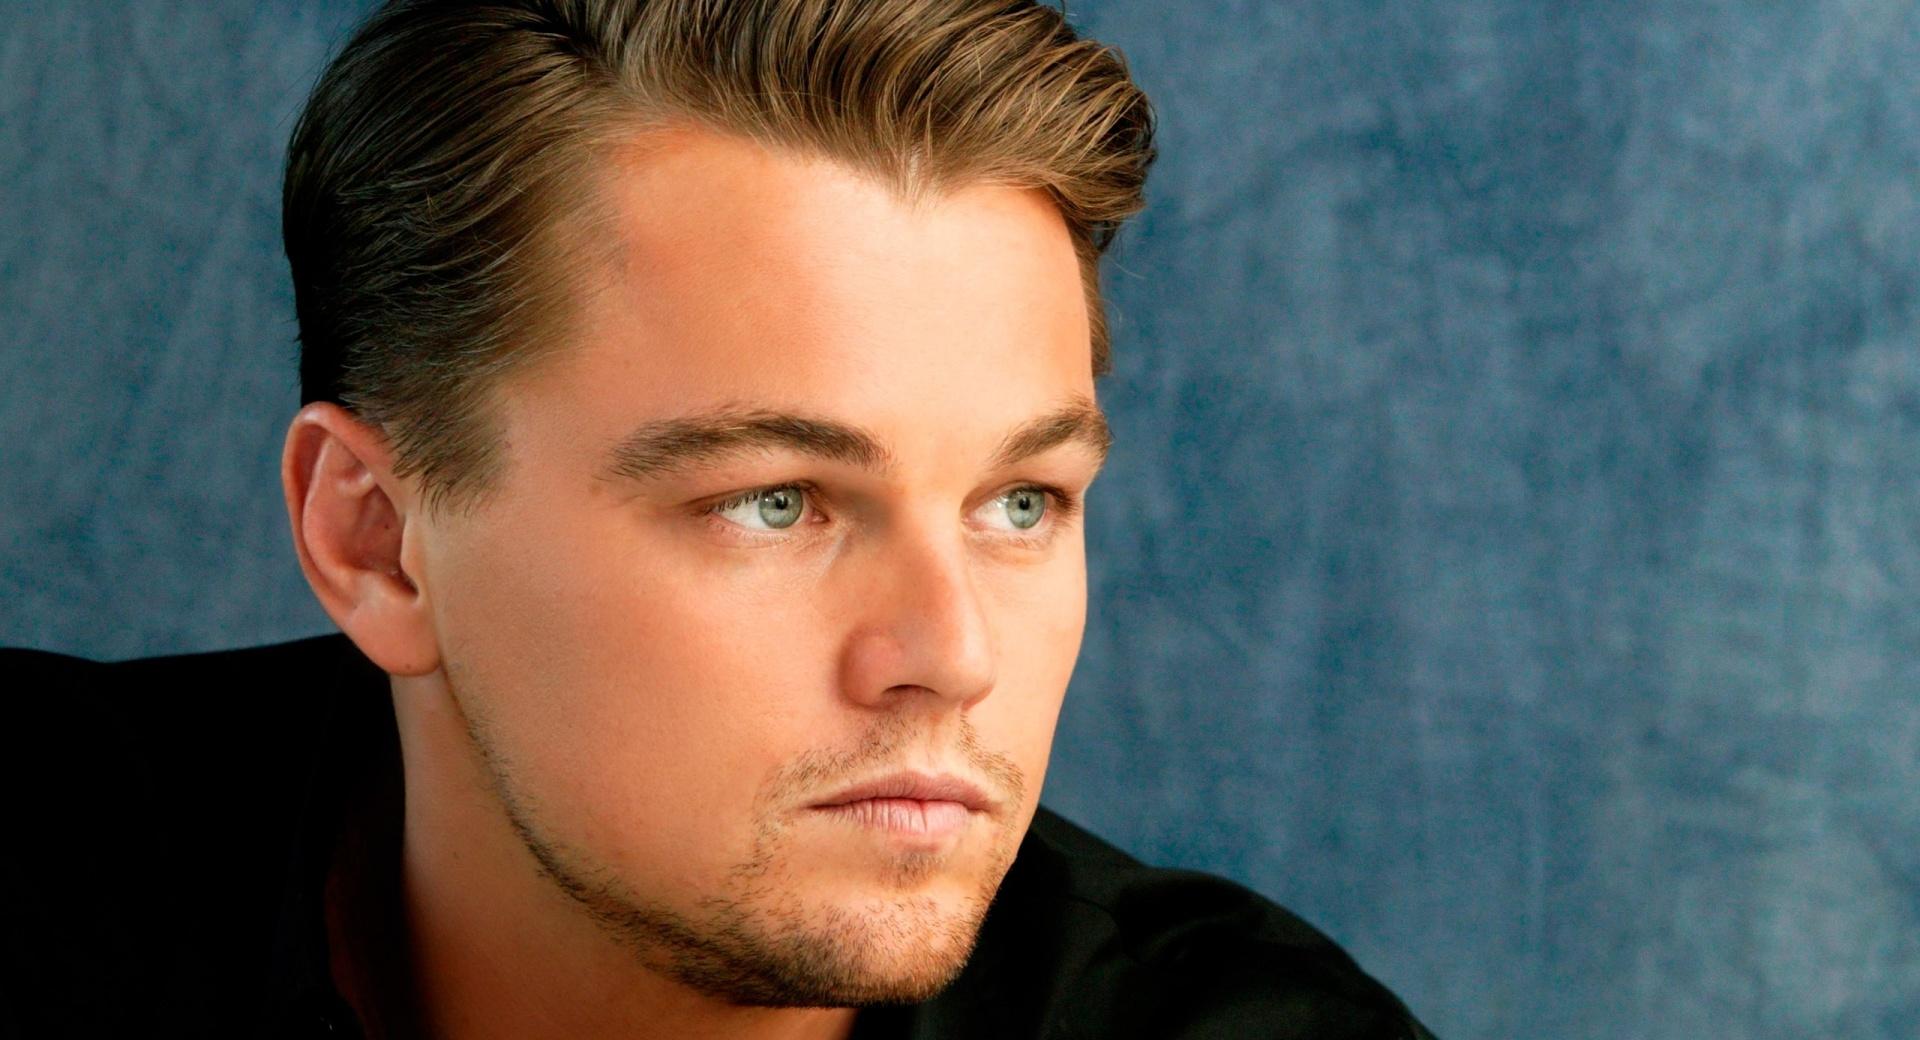 Leonardo DiCaprio Portrait at 1280 x 960 size wallpapers HD quality